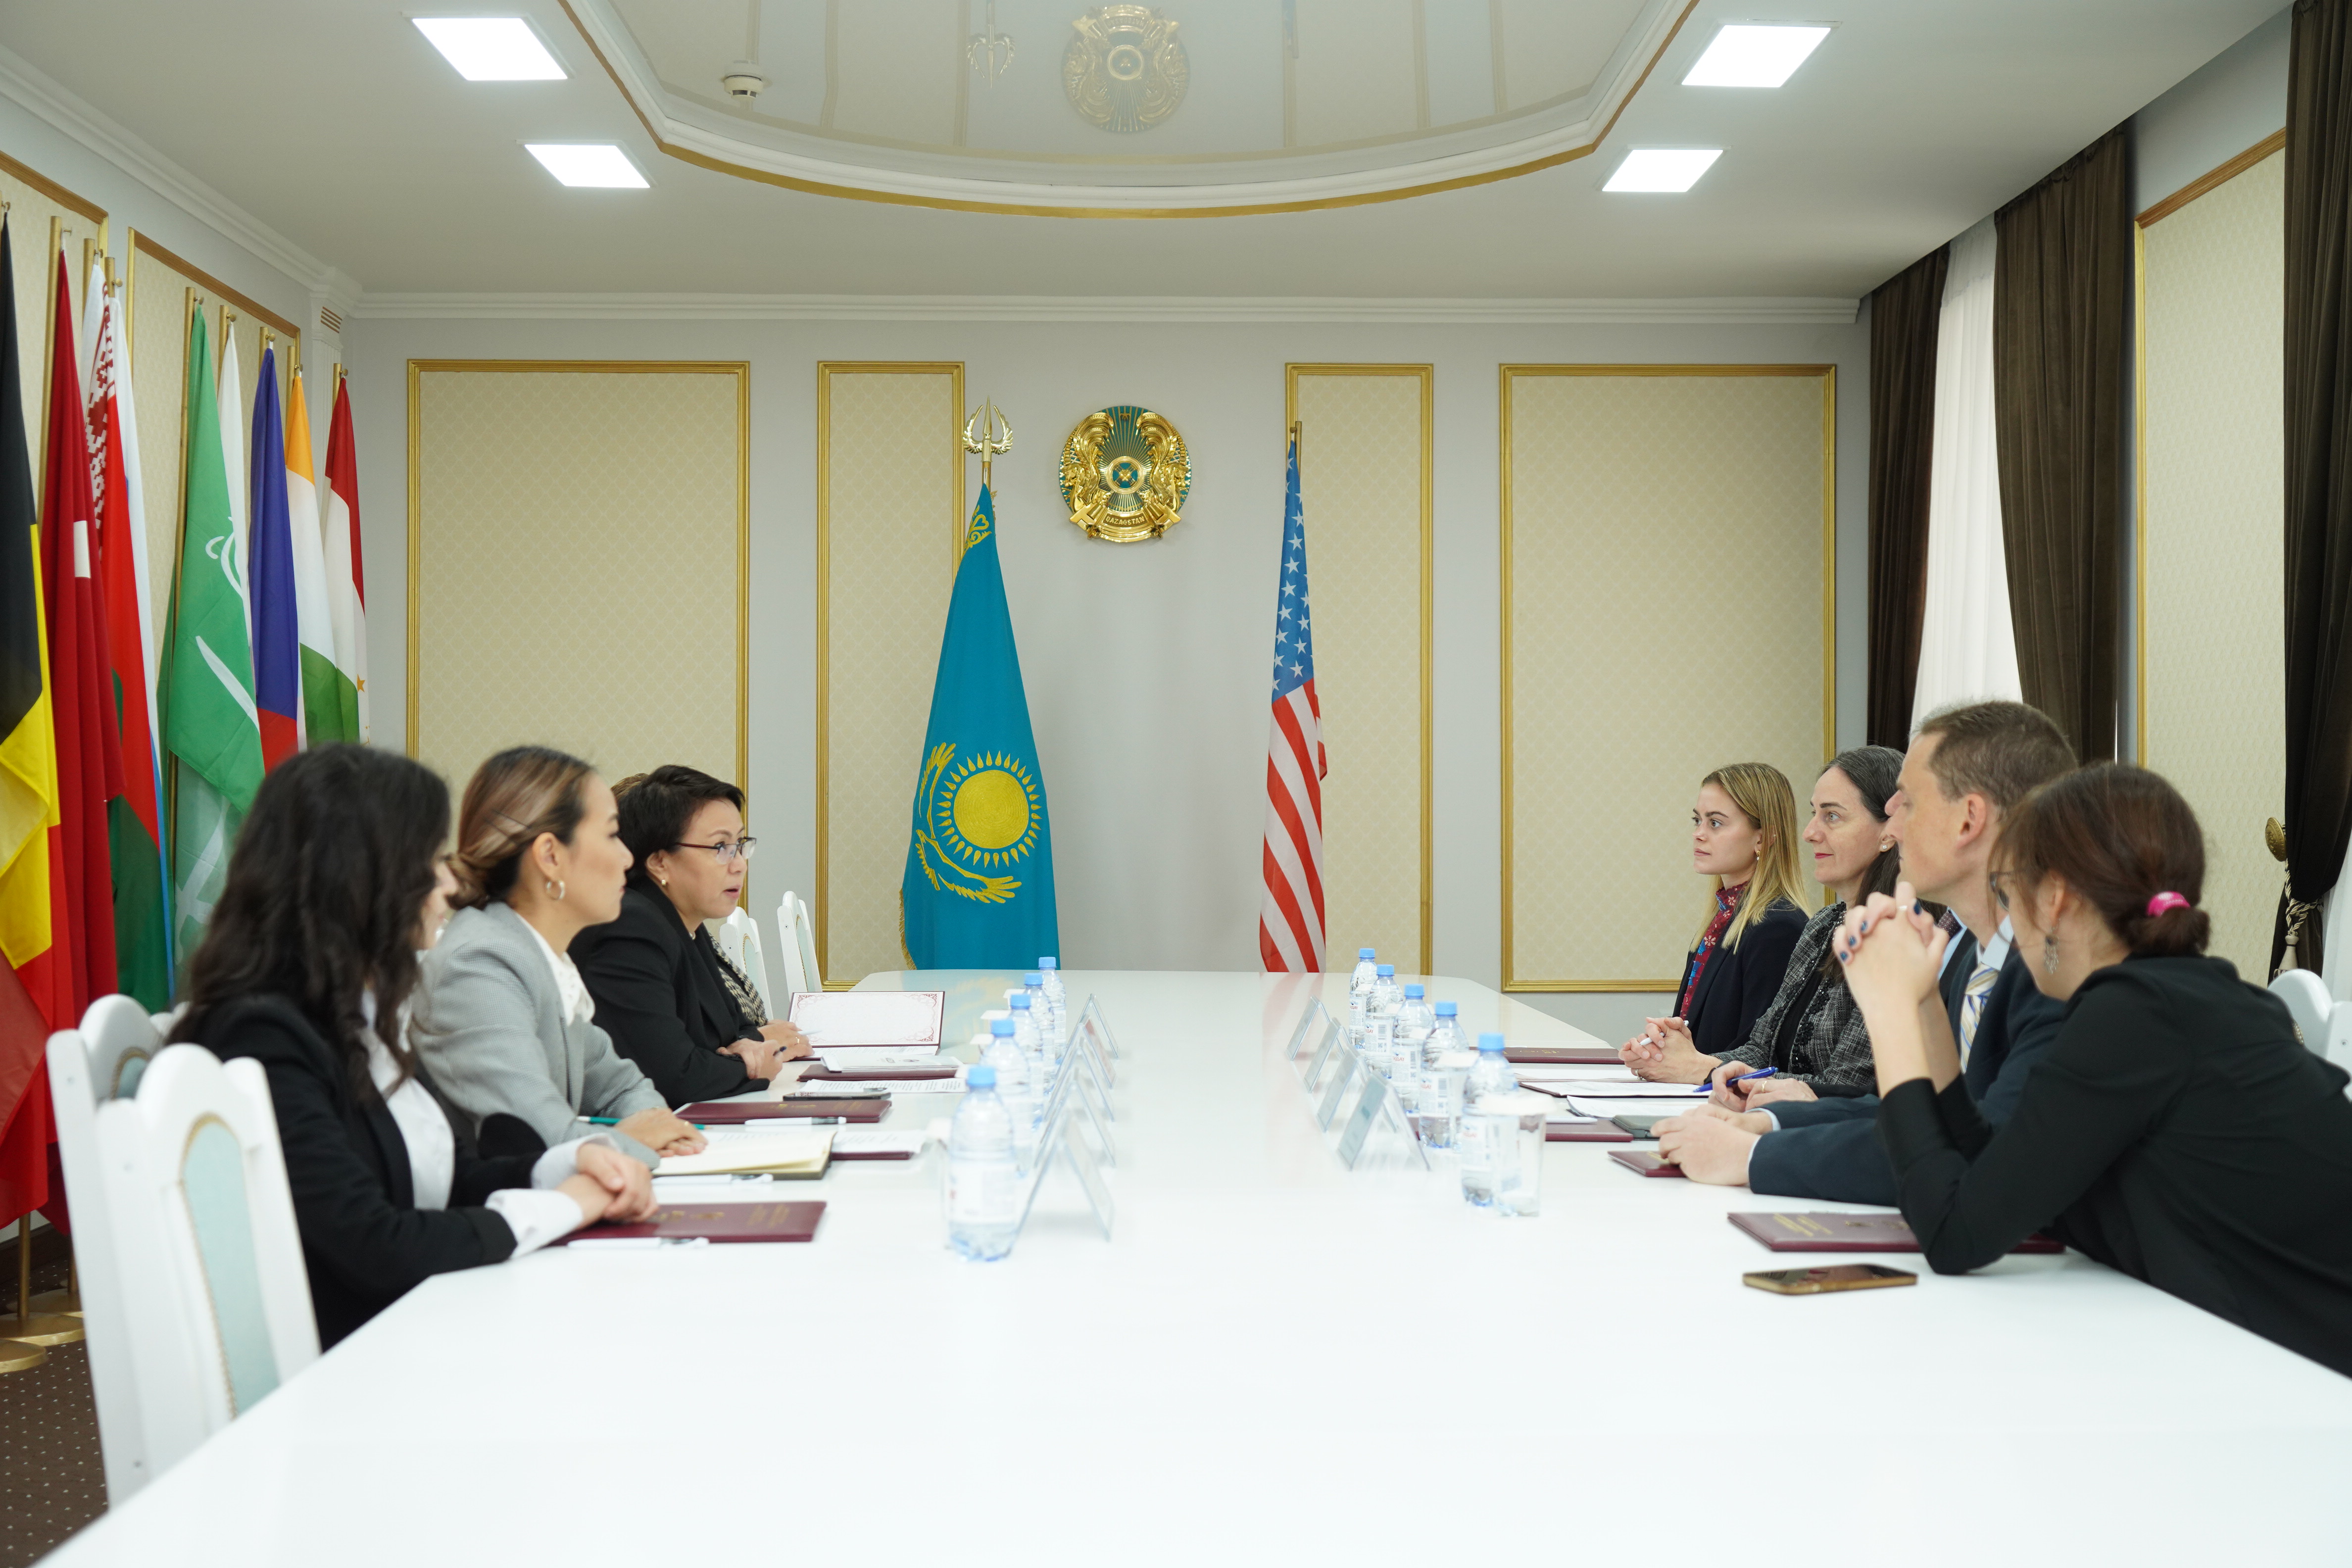 The US Ambassador paid a special visit to Auezov University